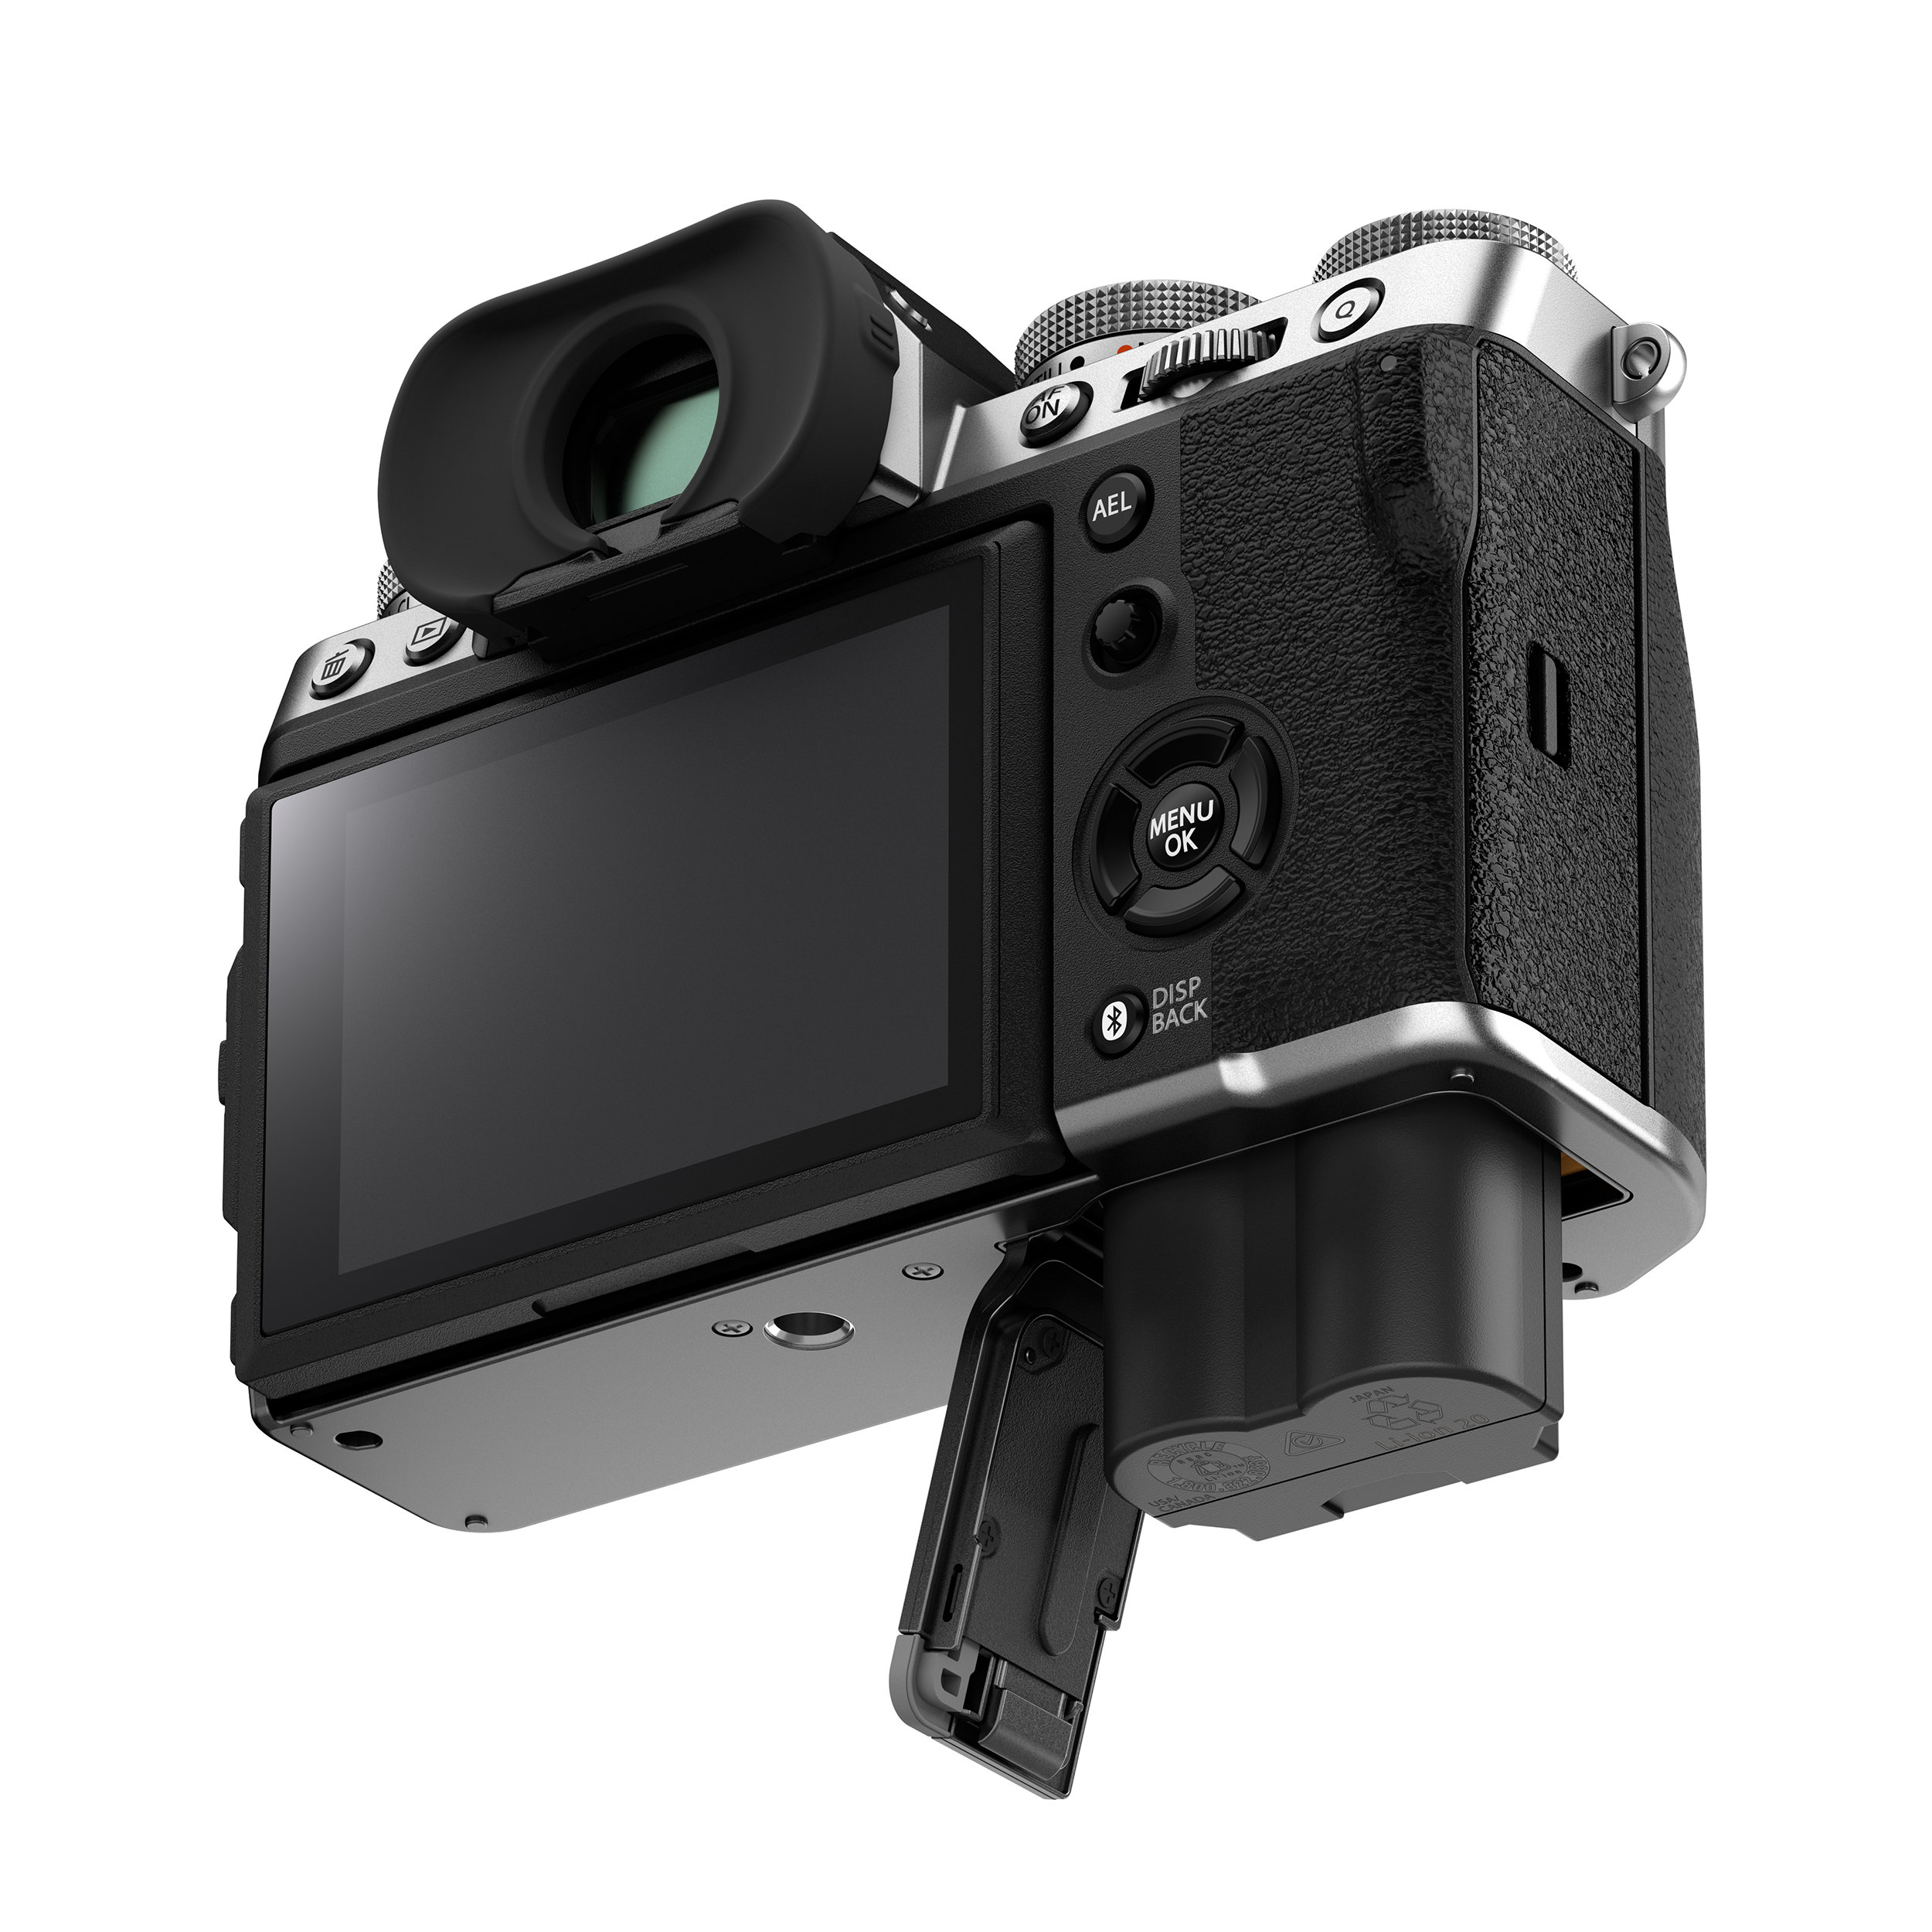 Fujifilm X-T5 Digital Mirrorless Camera with Fujinon XF 18-55mm f/2.8-4 R LM OIS Lens Kit